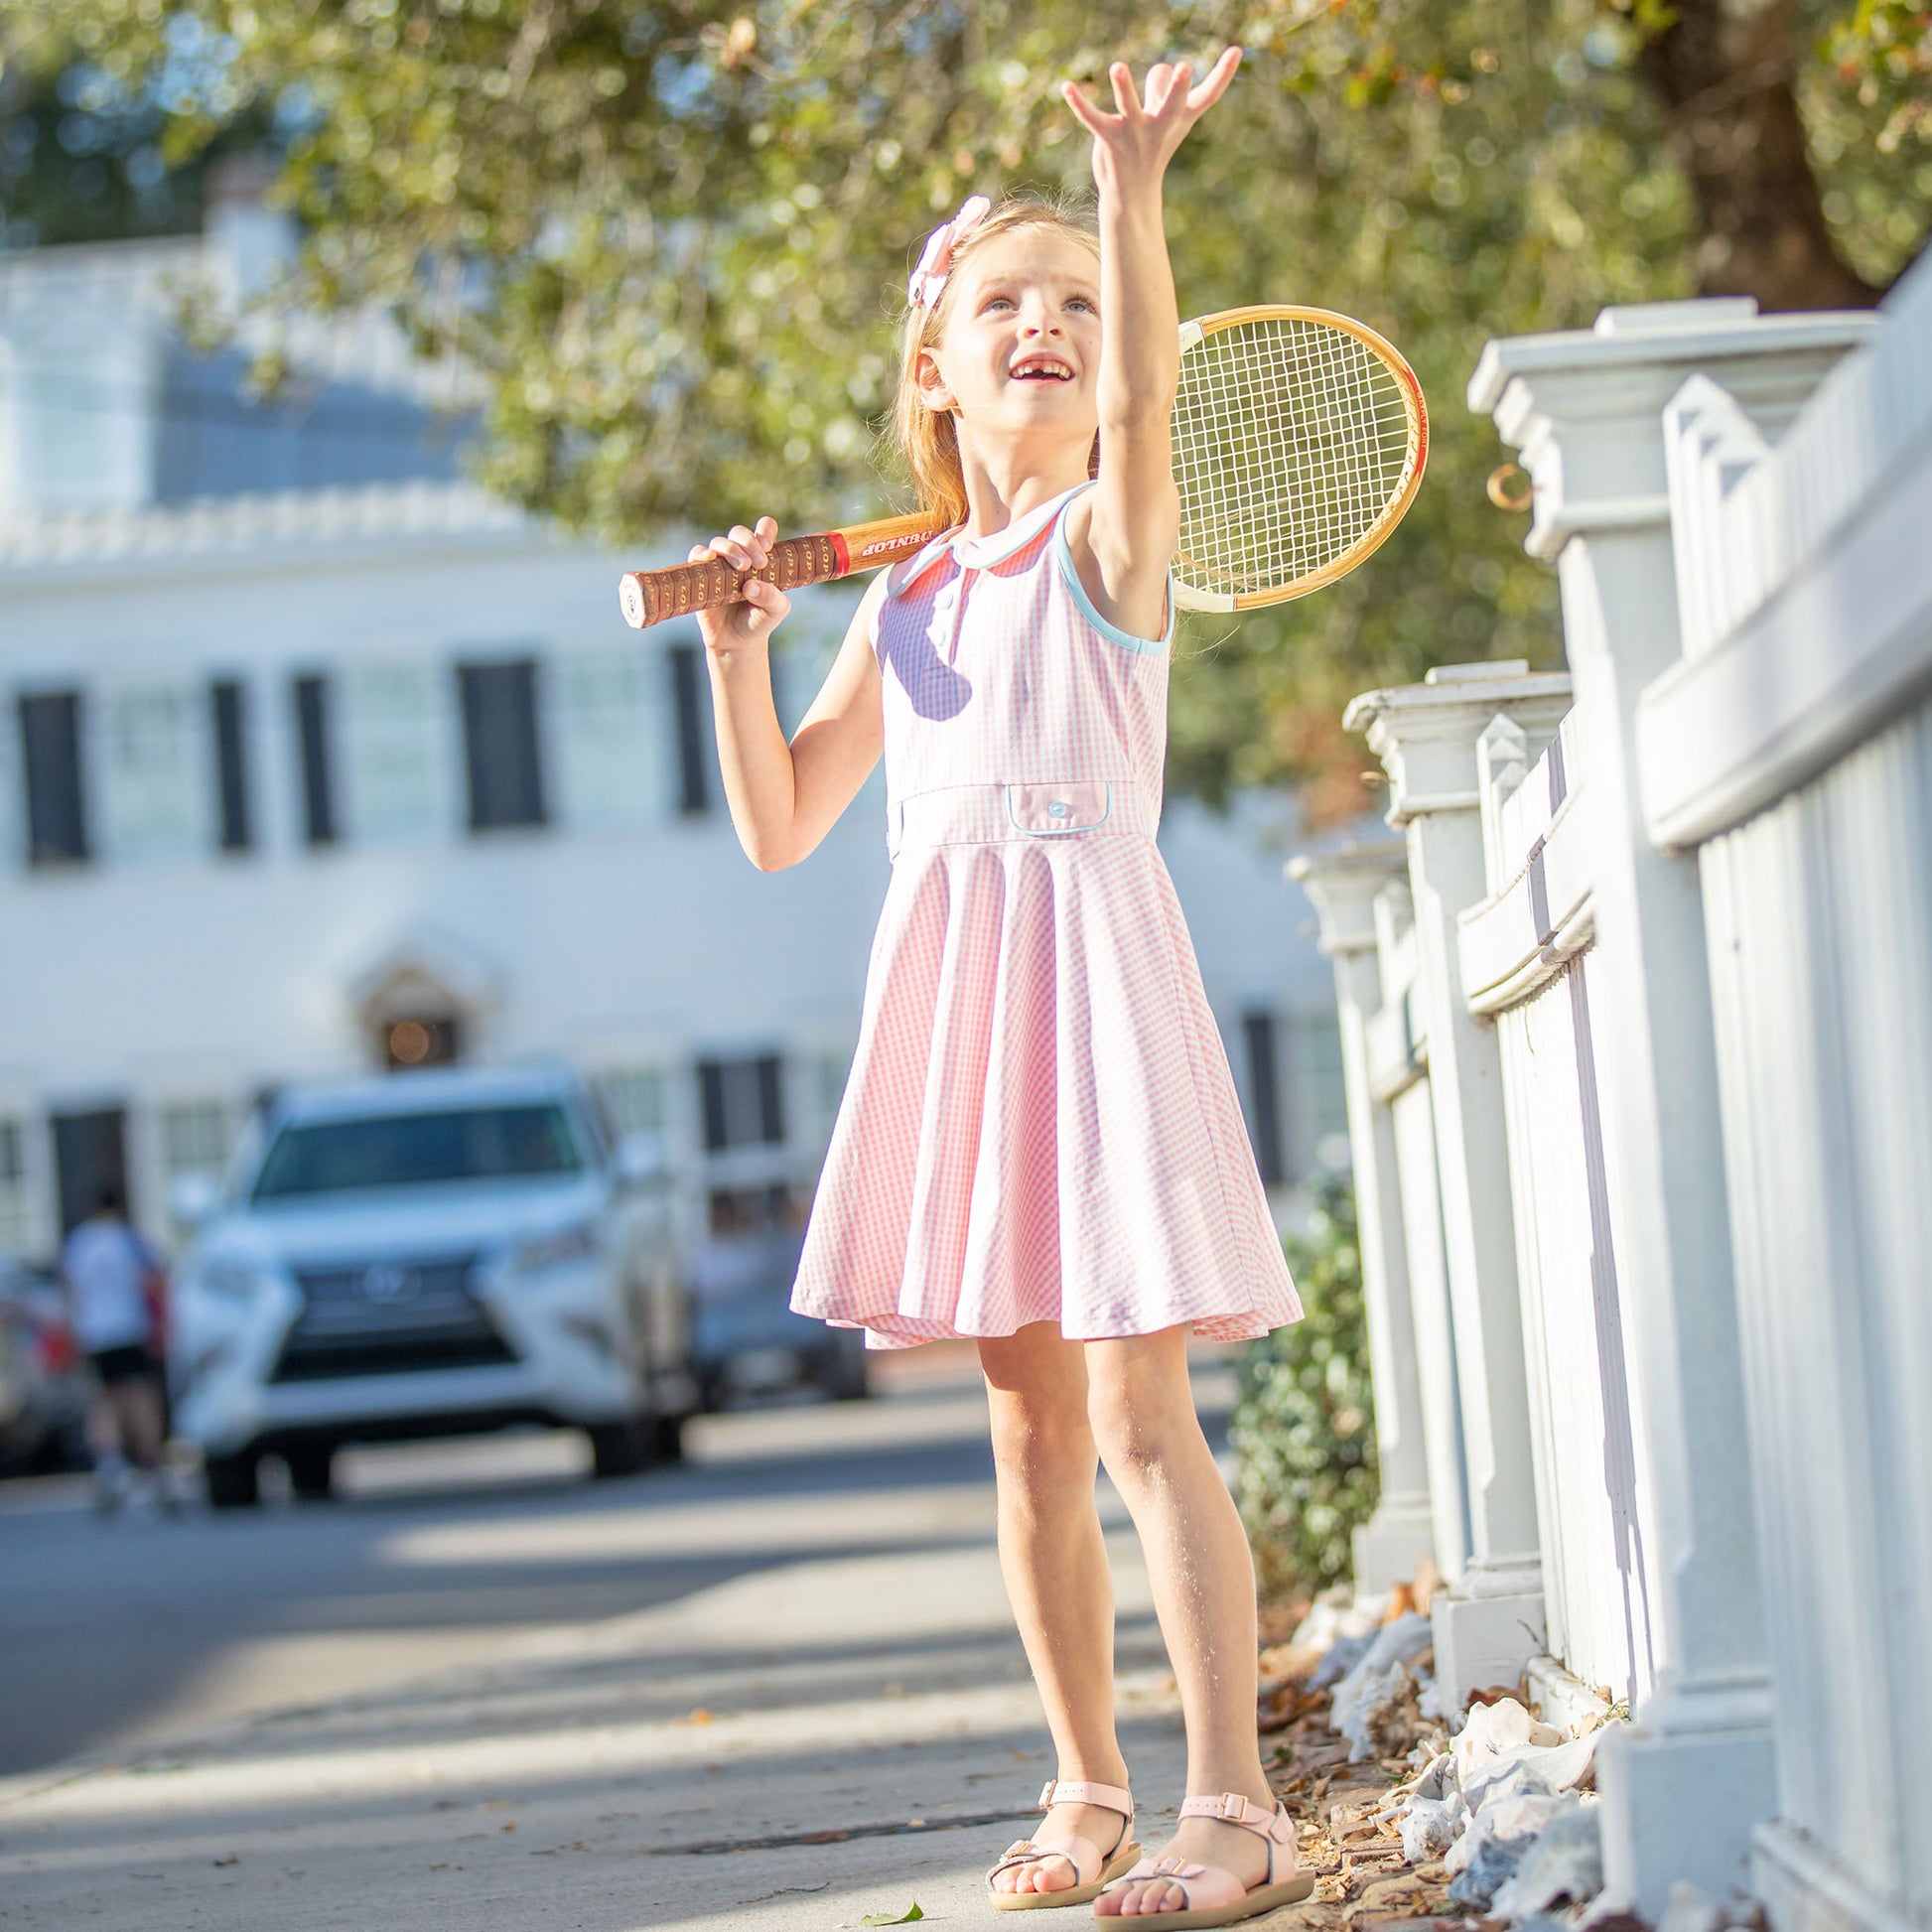 little girl holding a tennis racket on the sidewalk